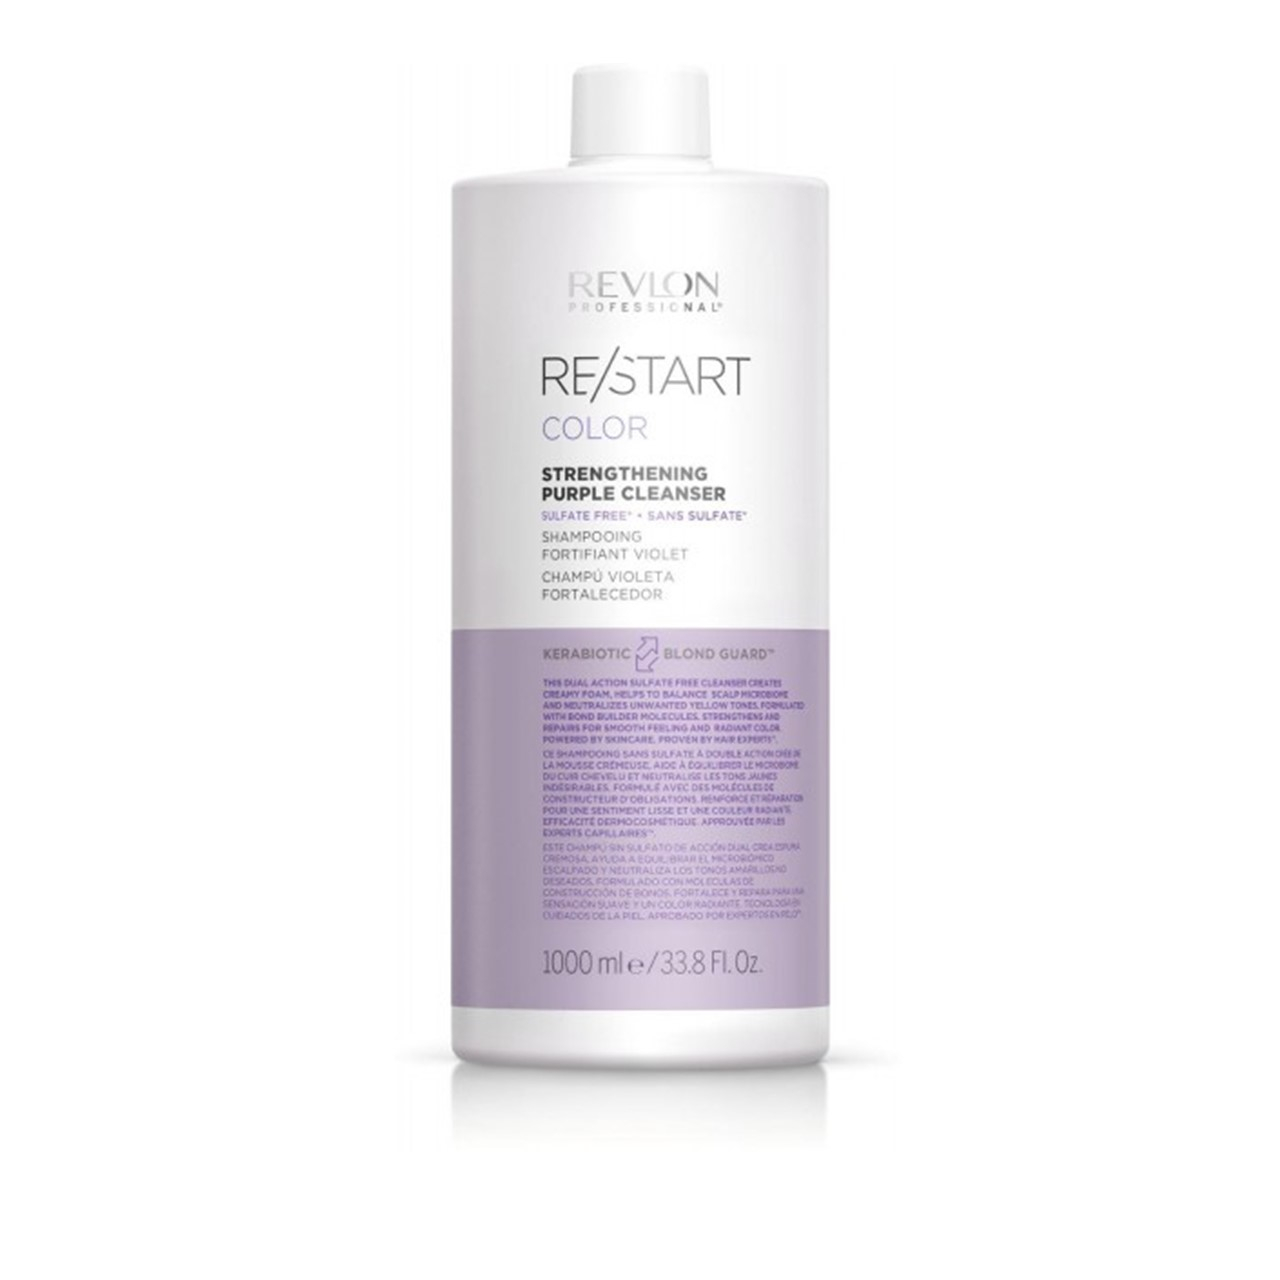 Revlon Professional USA Purple Strengthening Re/Start Color Cleanser Shampoo Buy ·